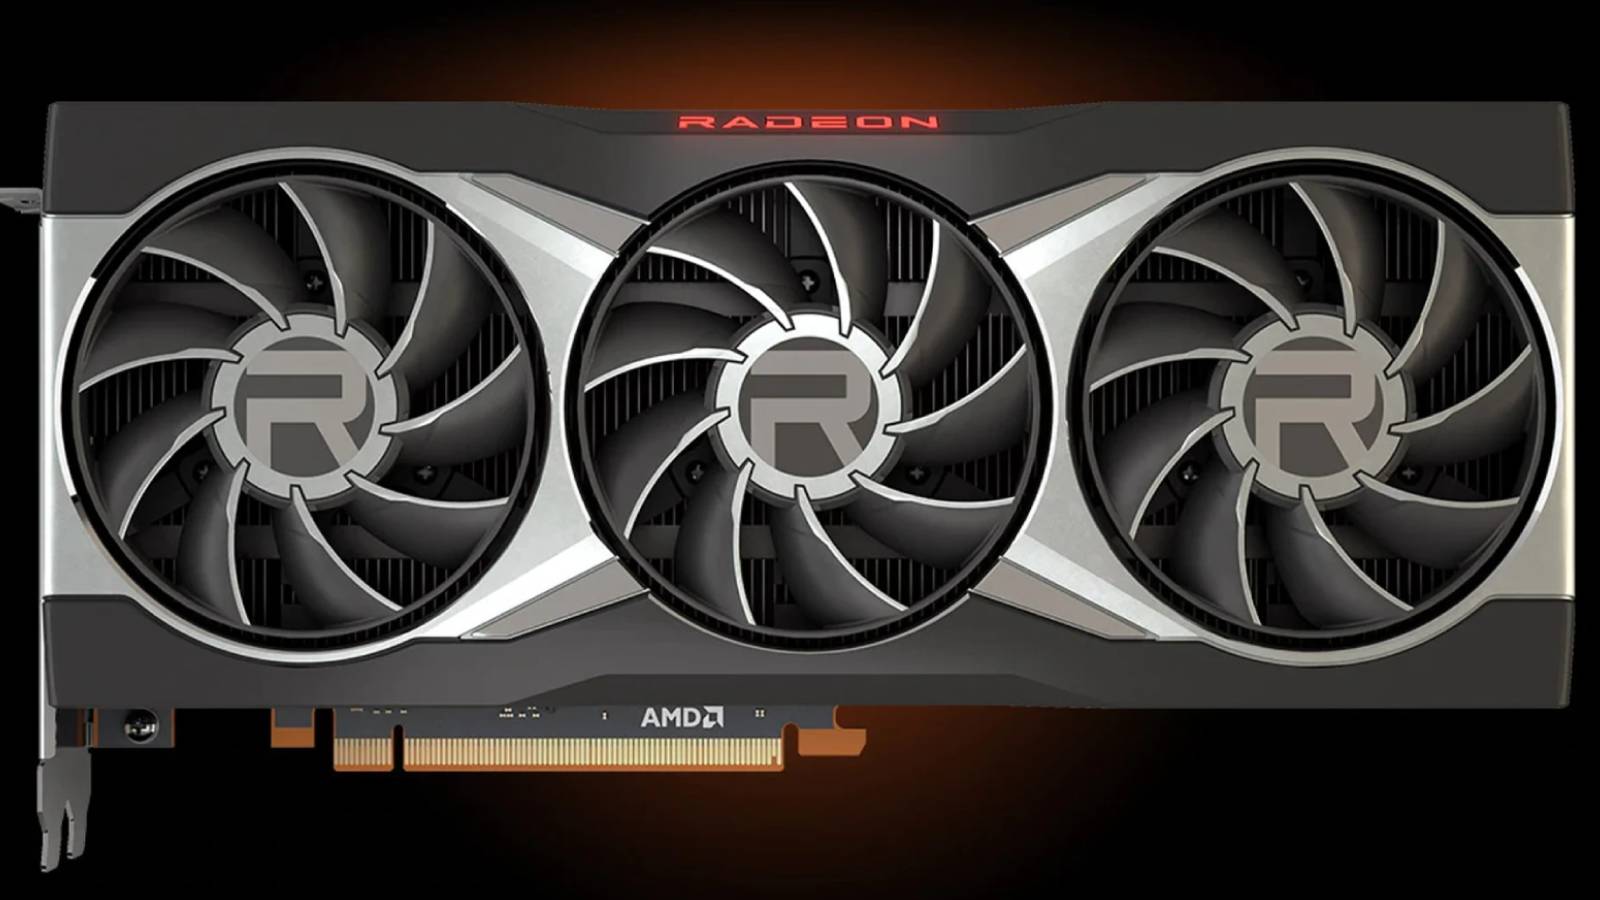 An AMD graphics card